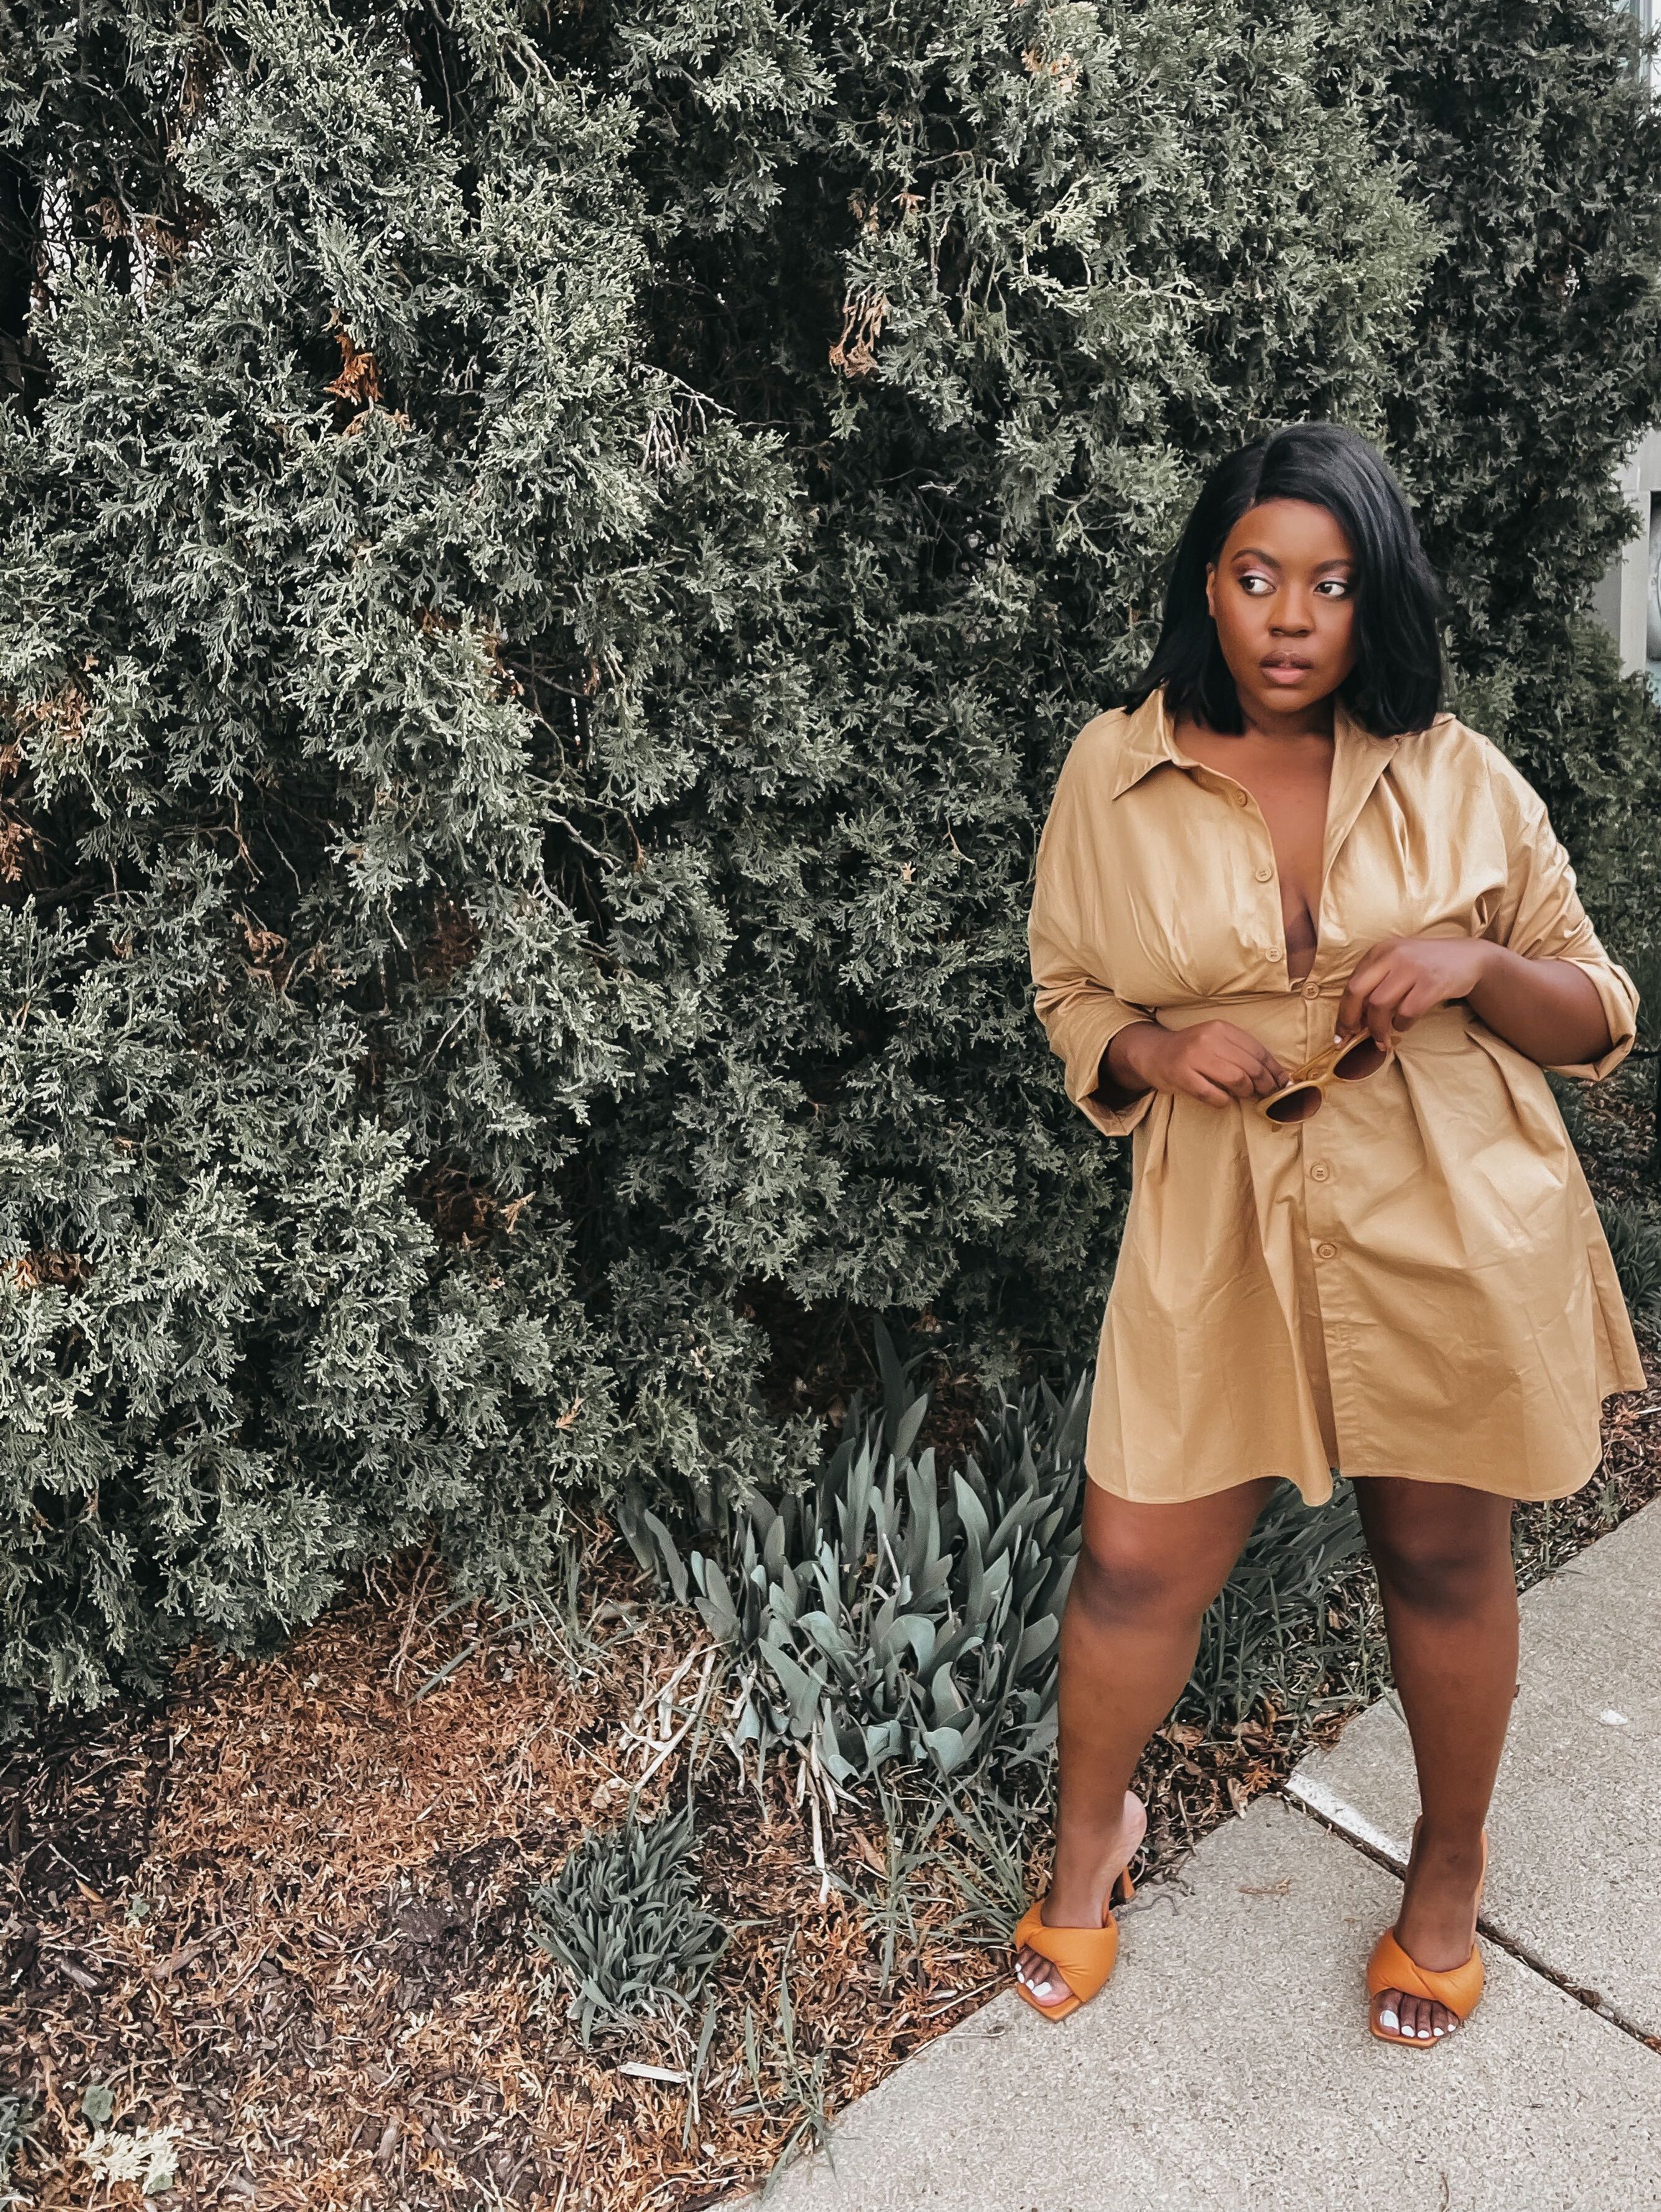 The author, Charlene Masona, an SU graduate student, is color-blocking her fashion look.